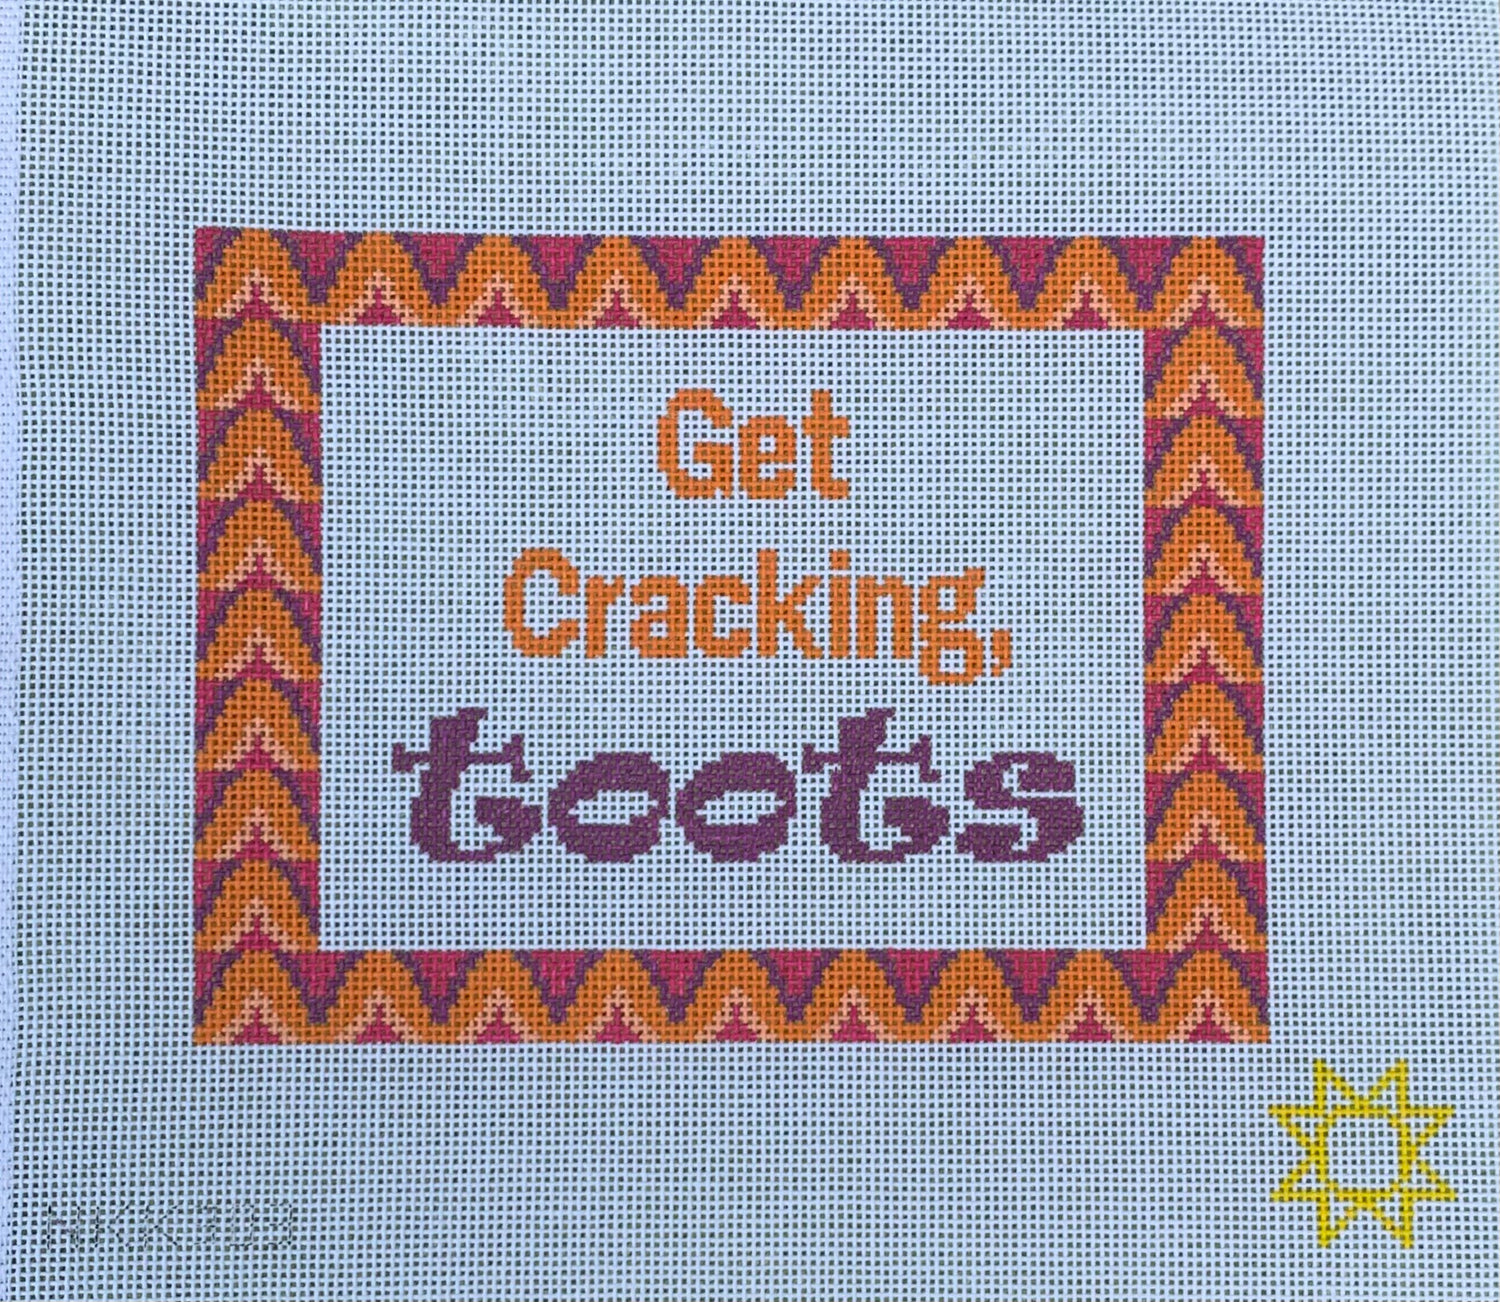 Get Cracking, Toots